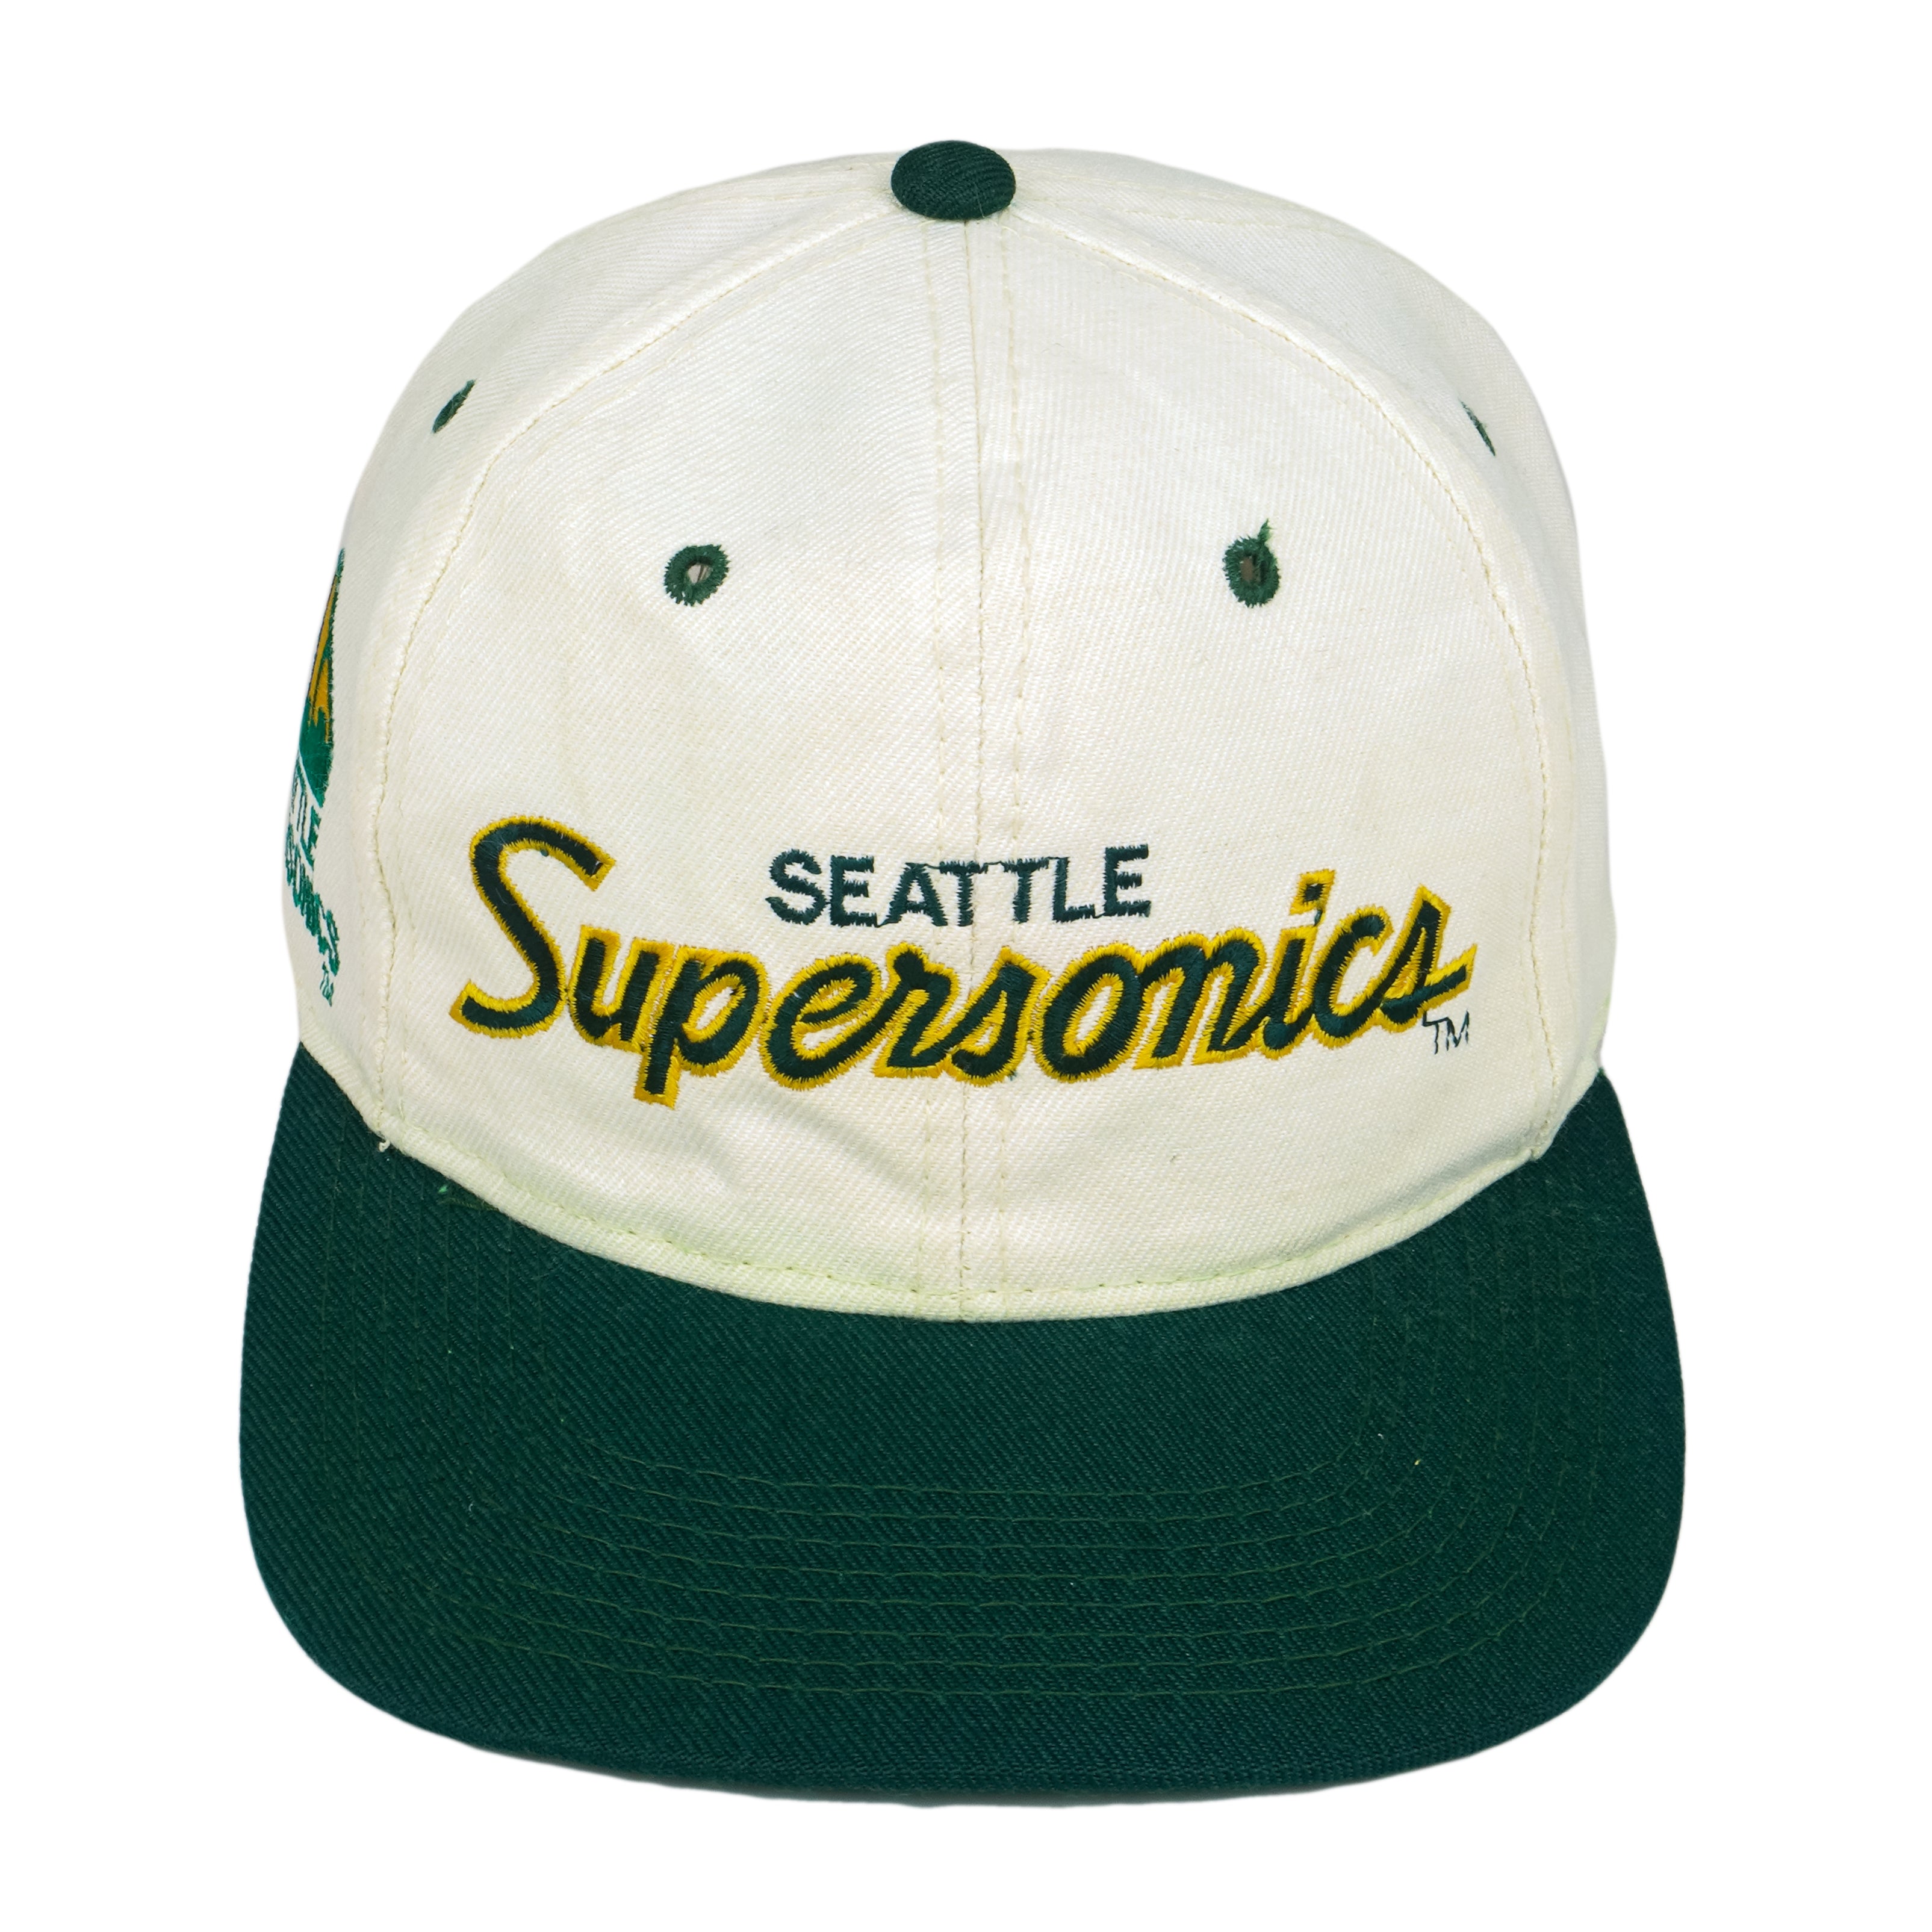 Vintage Sports Specialties Winnipeg Jets SnapBack Hat